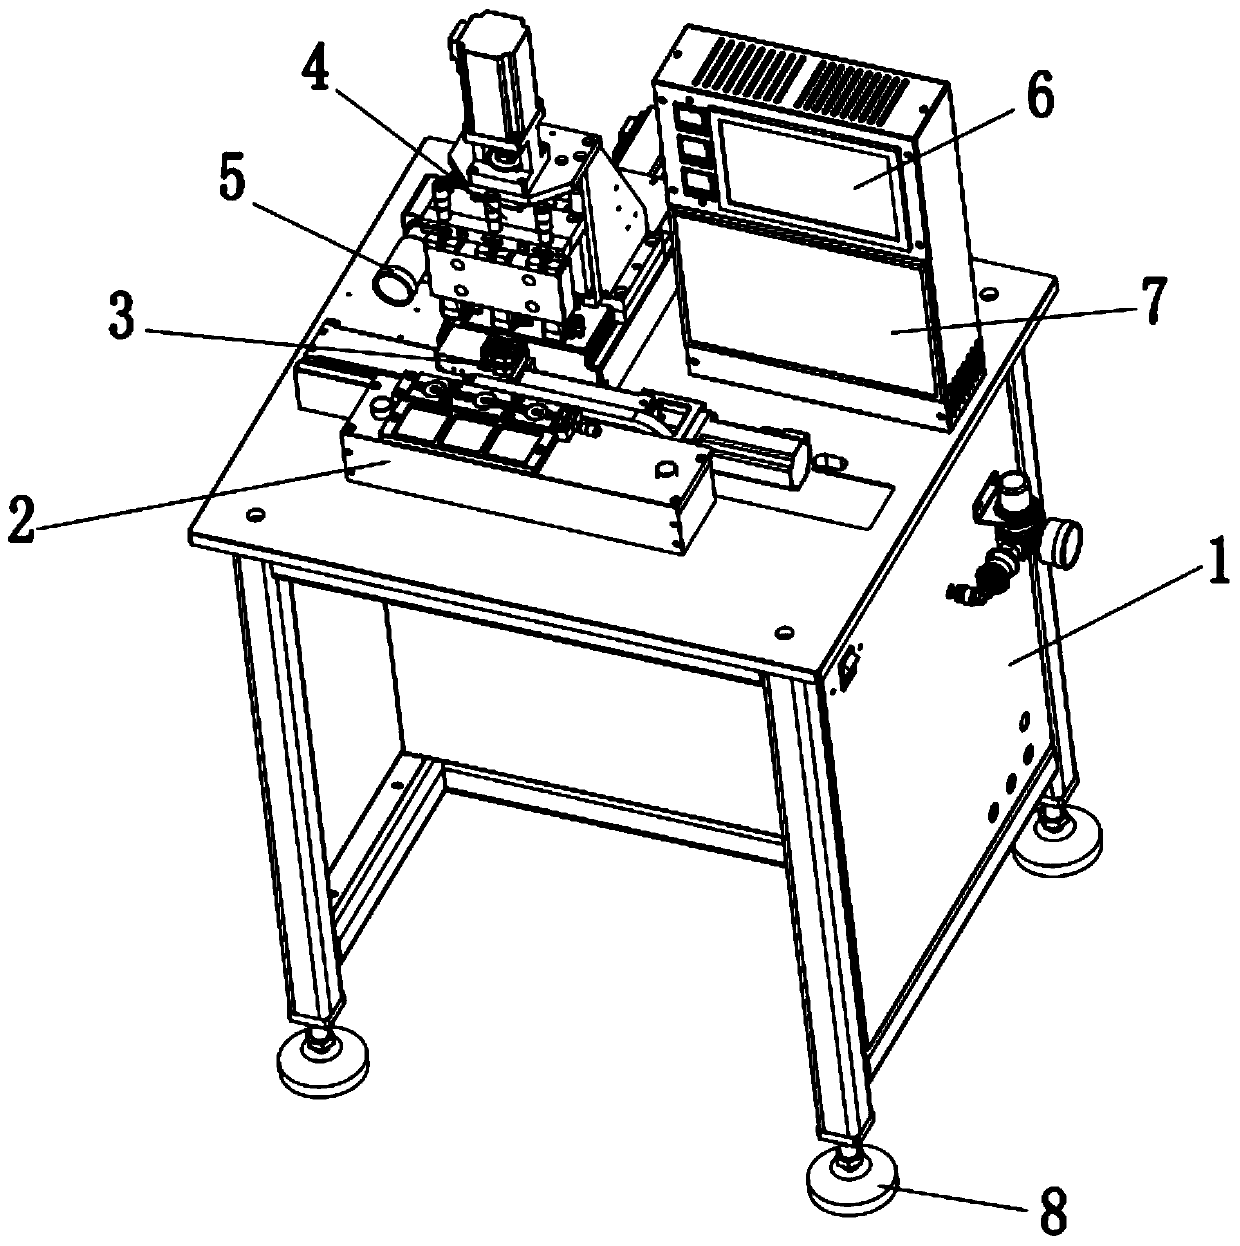 Full-automatic pointer assembling machine